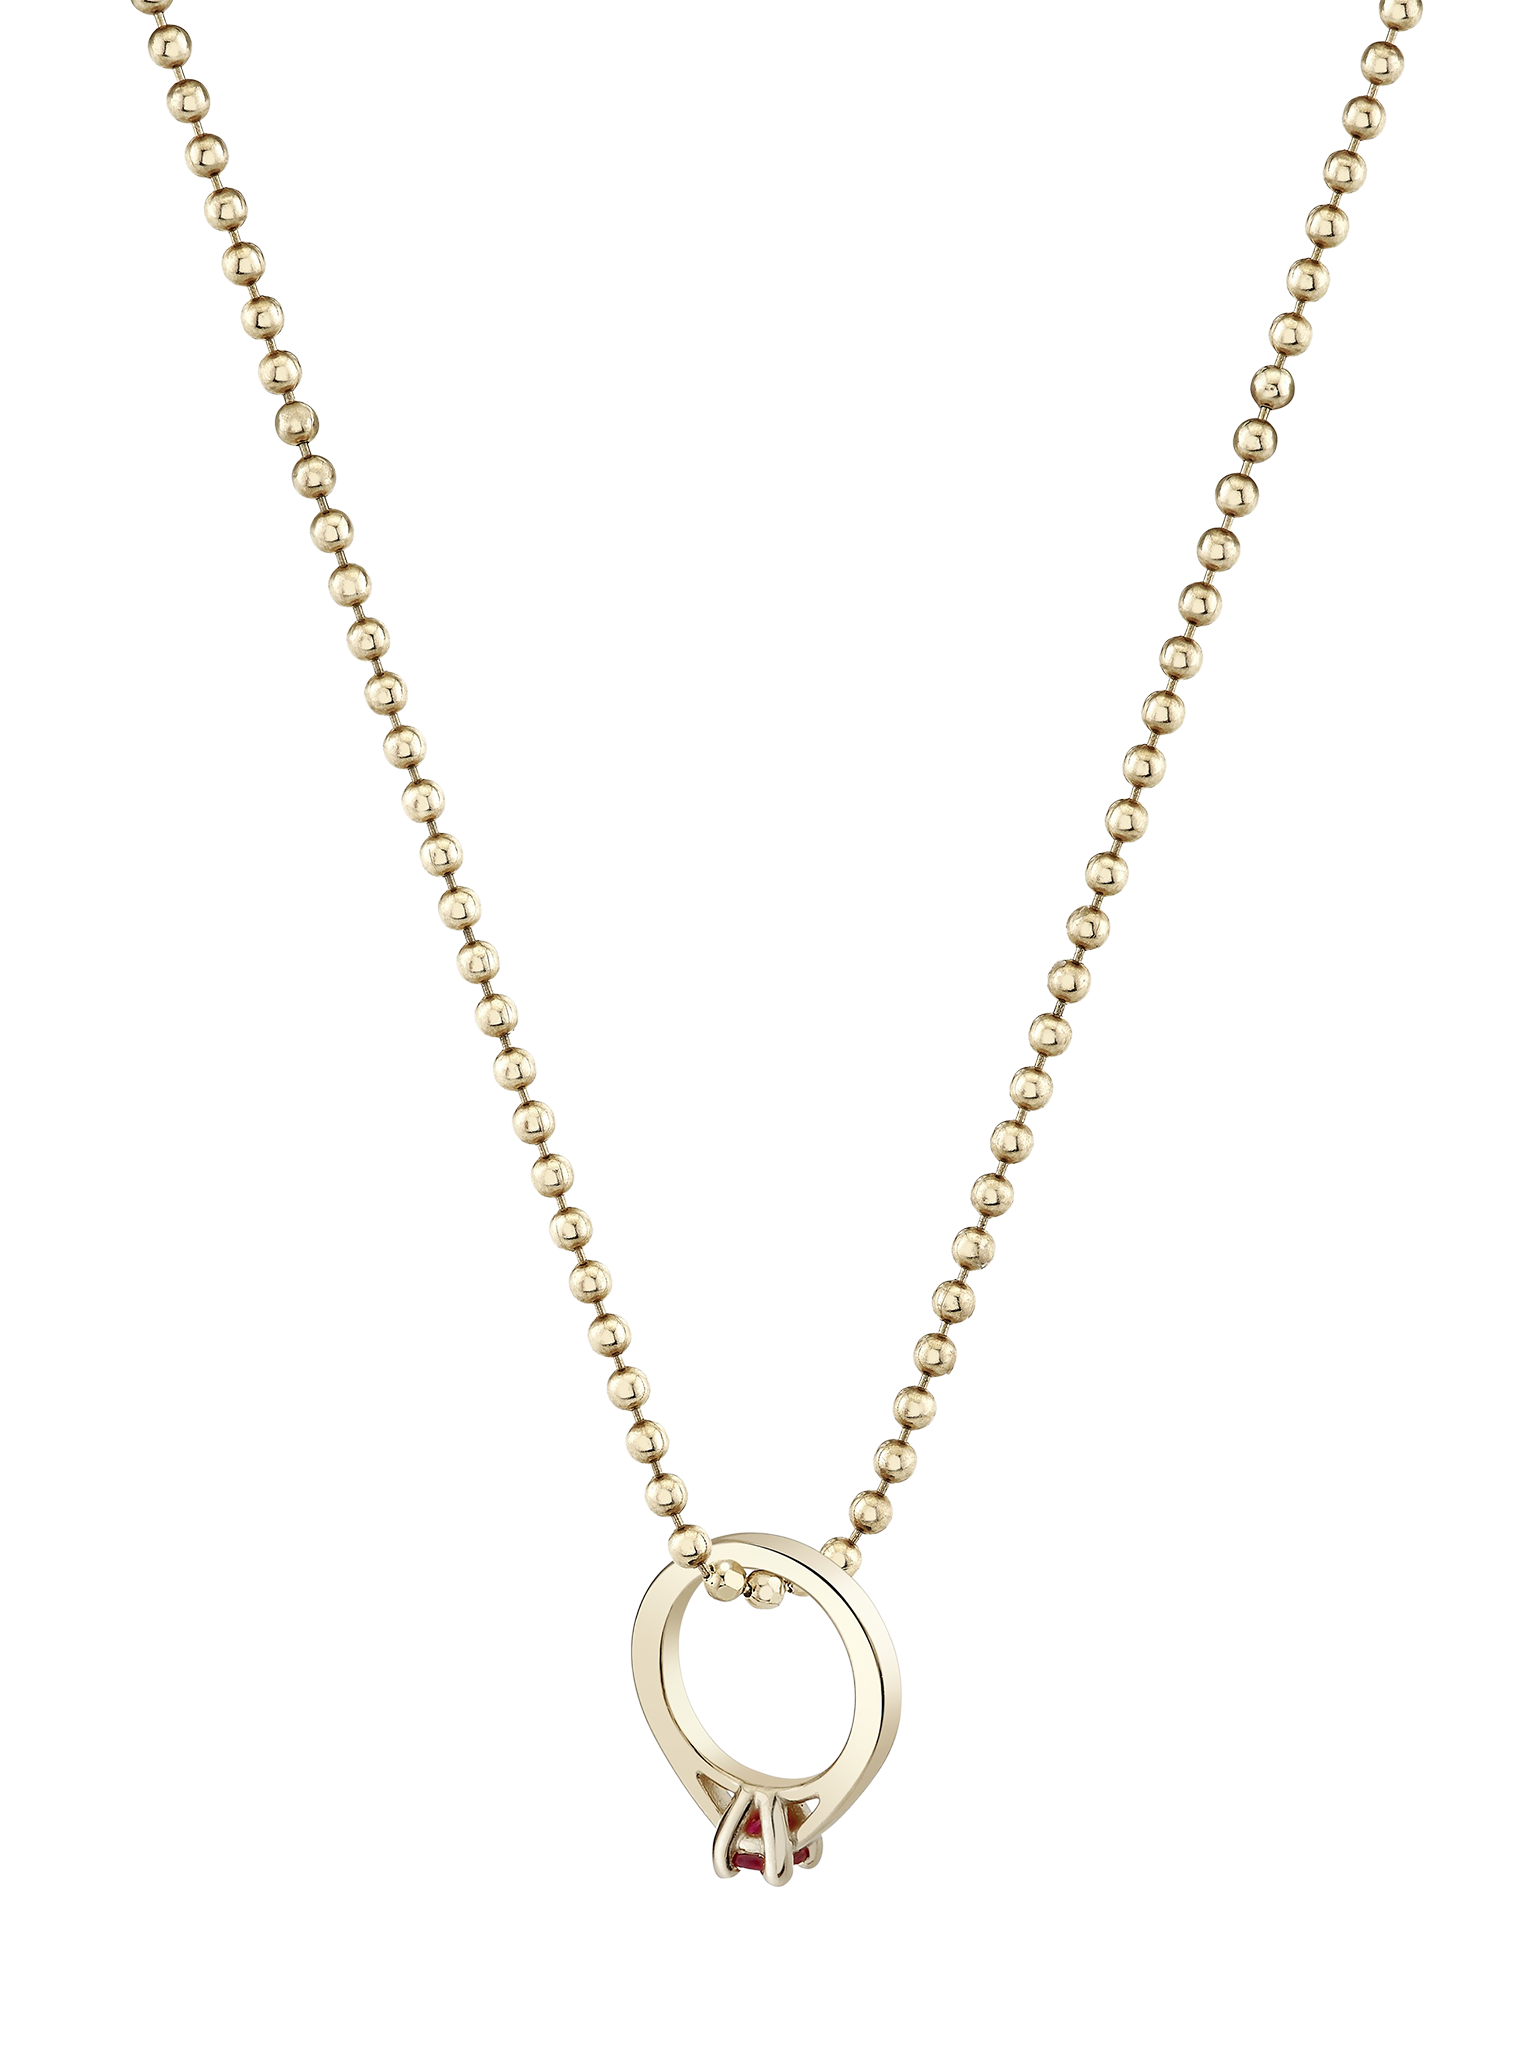 Teensy Birthstone Ring Charm with 16" chain